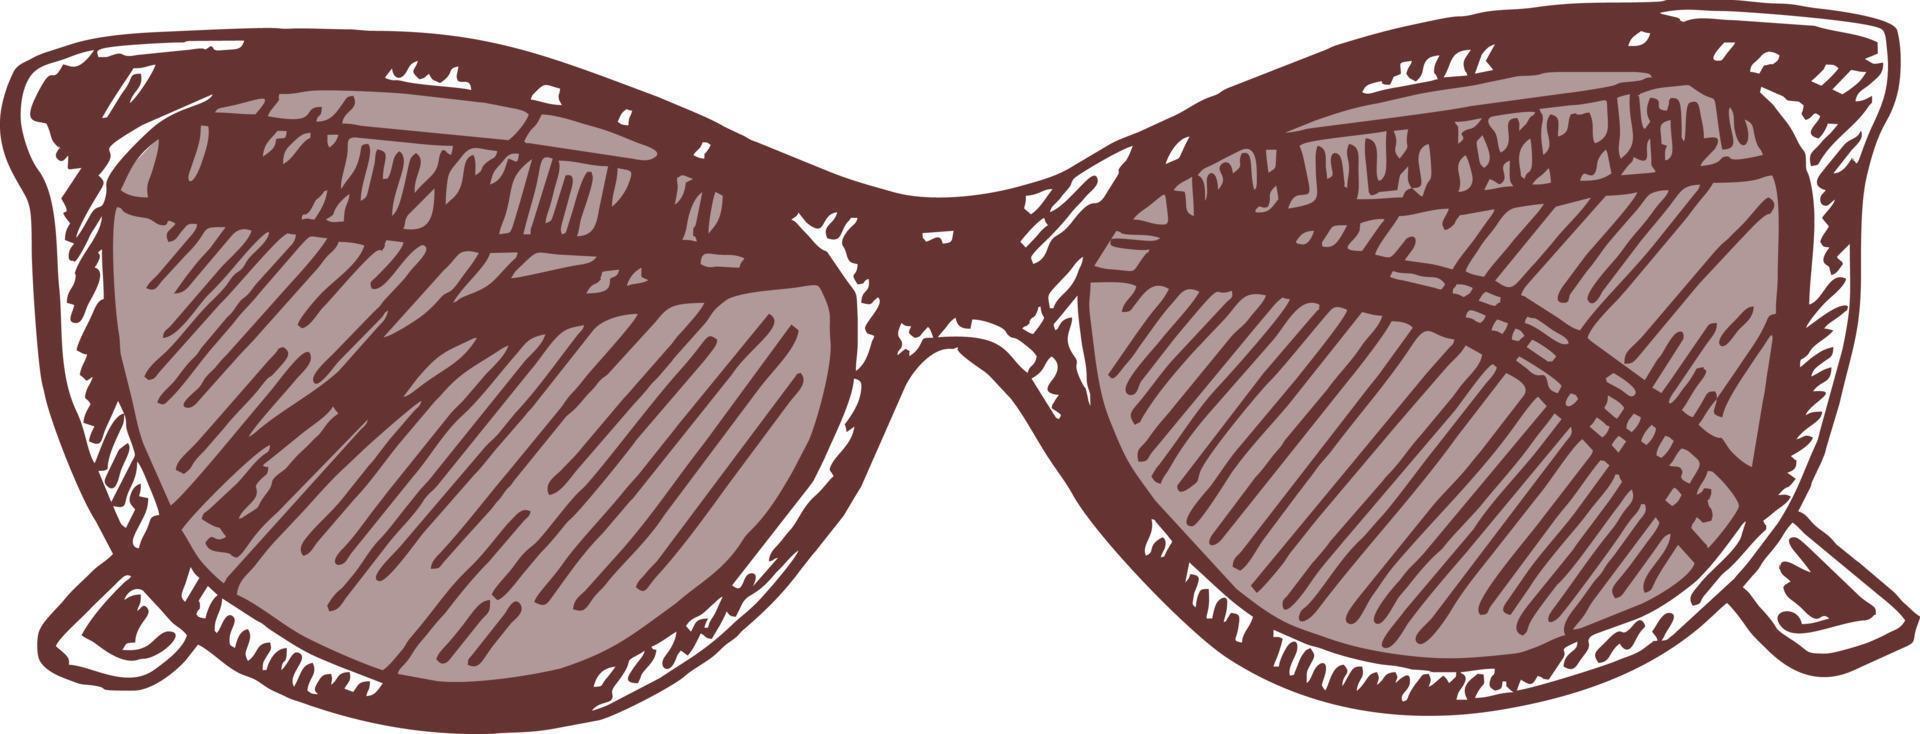 Sunglasses. Hand drawn Sketch vector